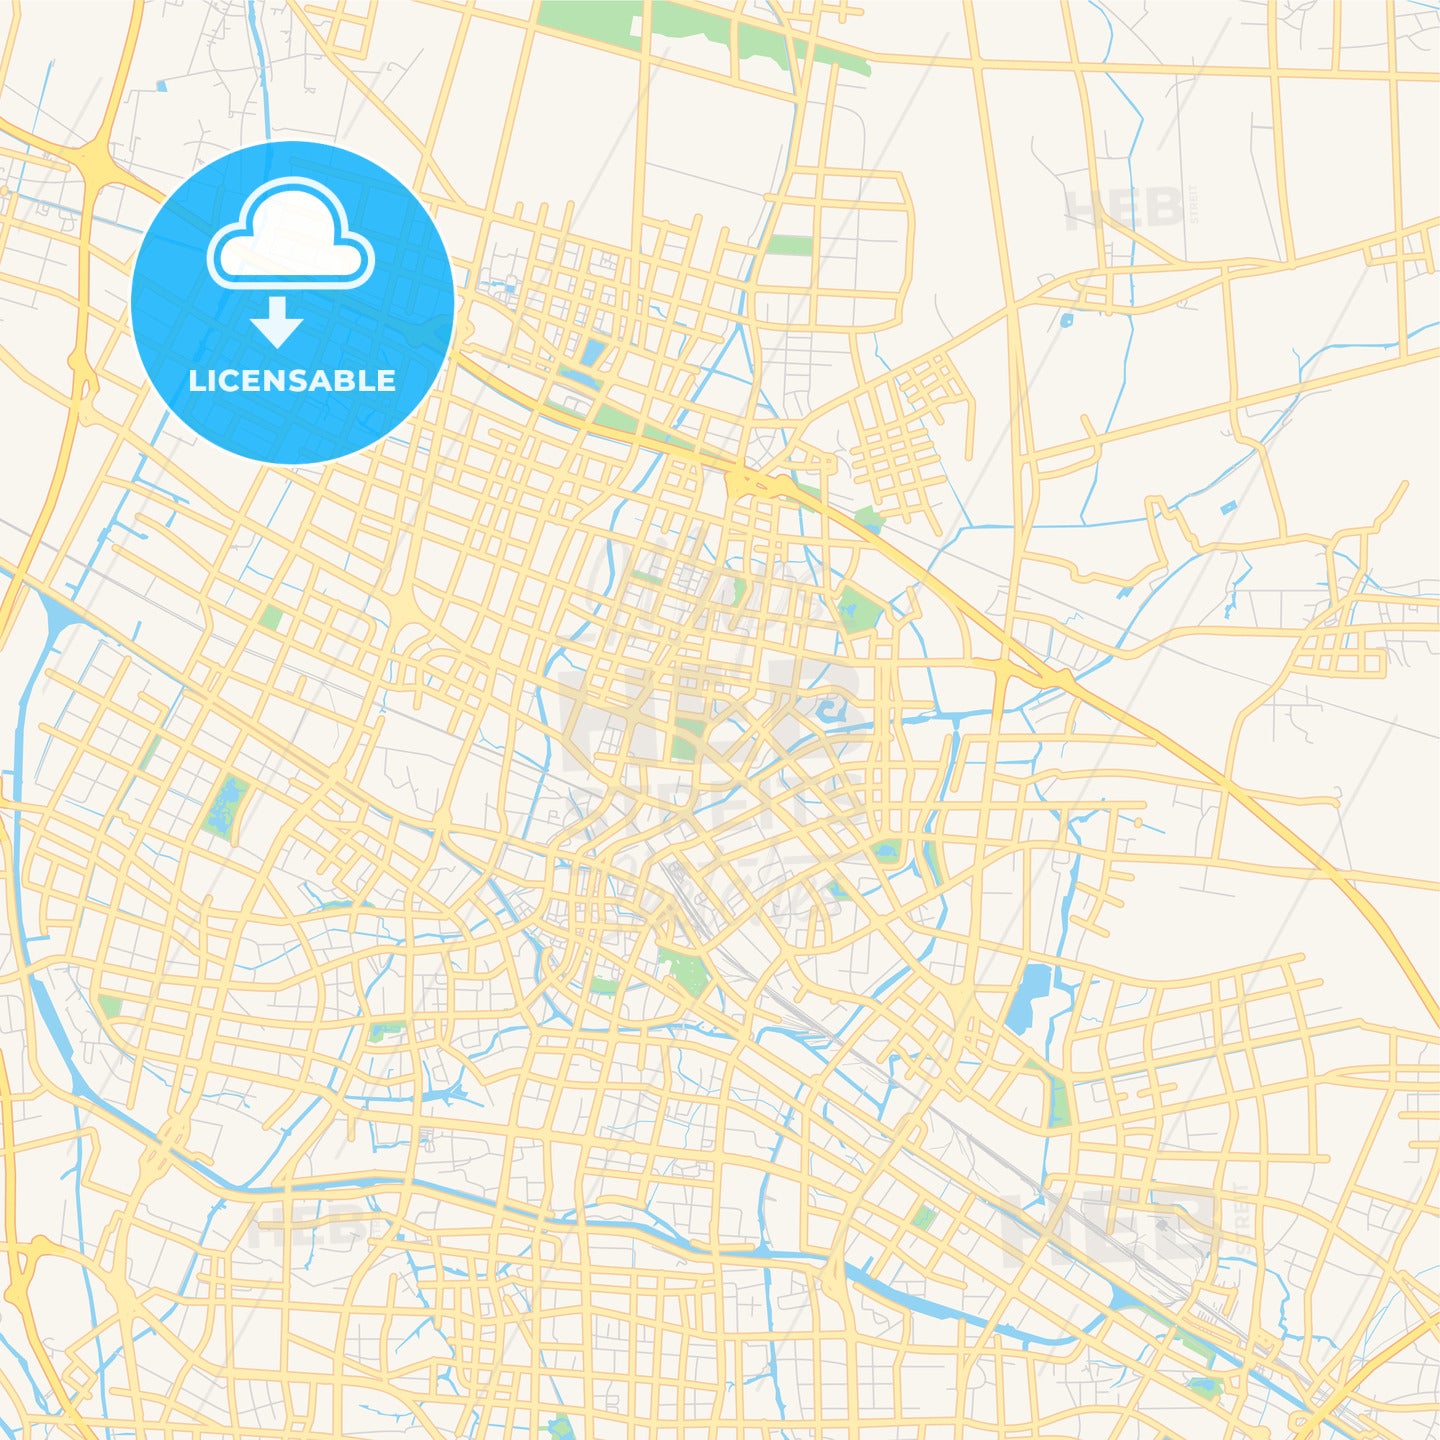 Printable street map of Changzhou, China